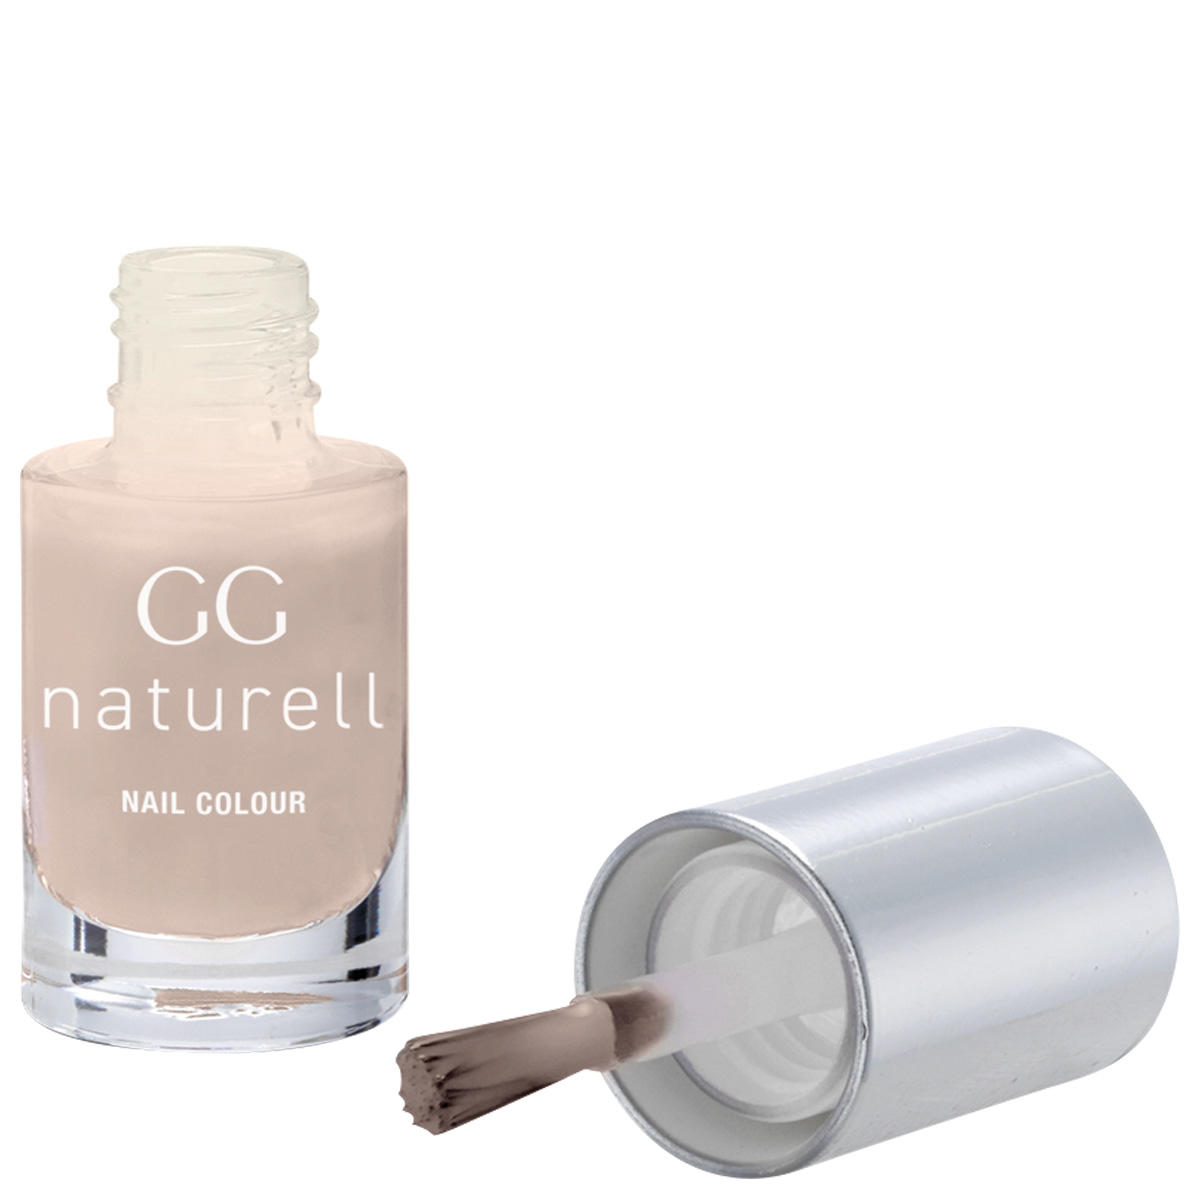 GERTRAUD GRUBER GG naturell Nail Colour  - 1